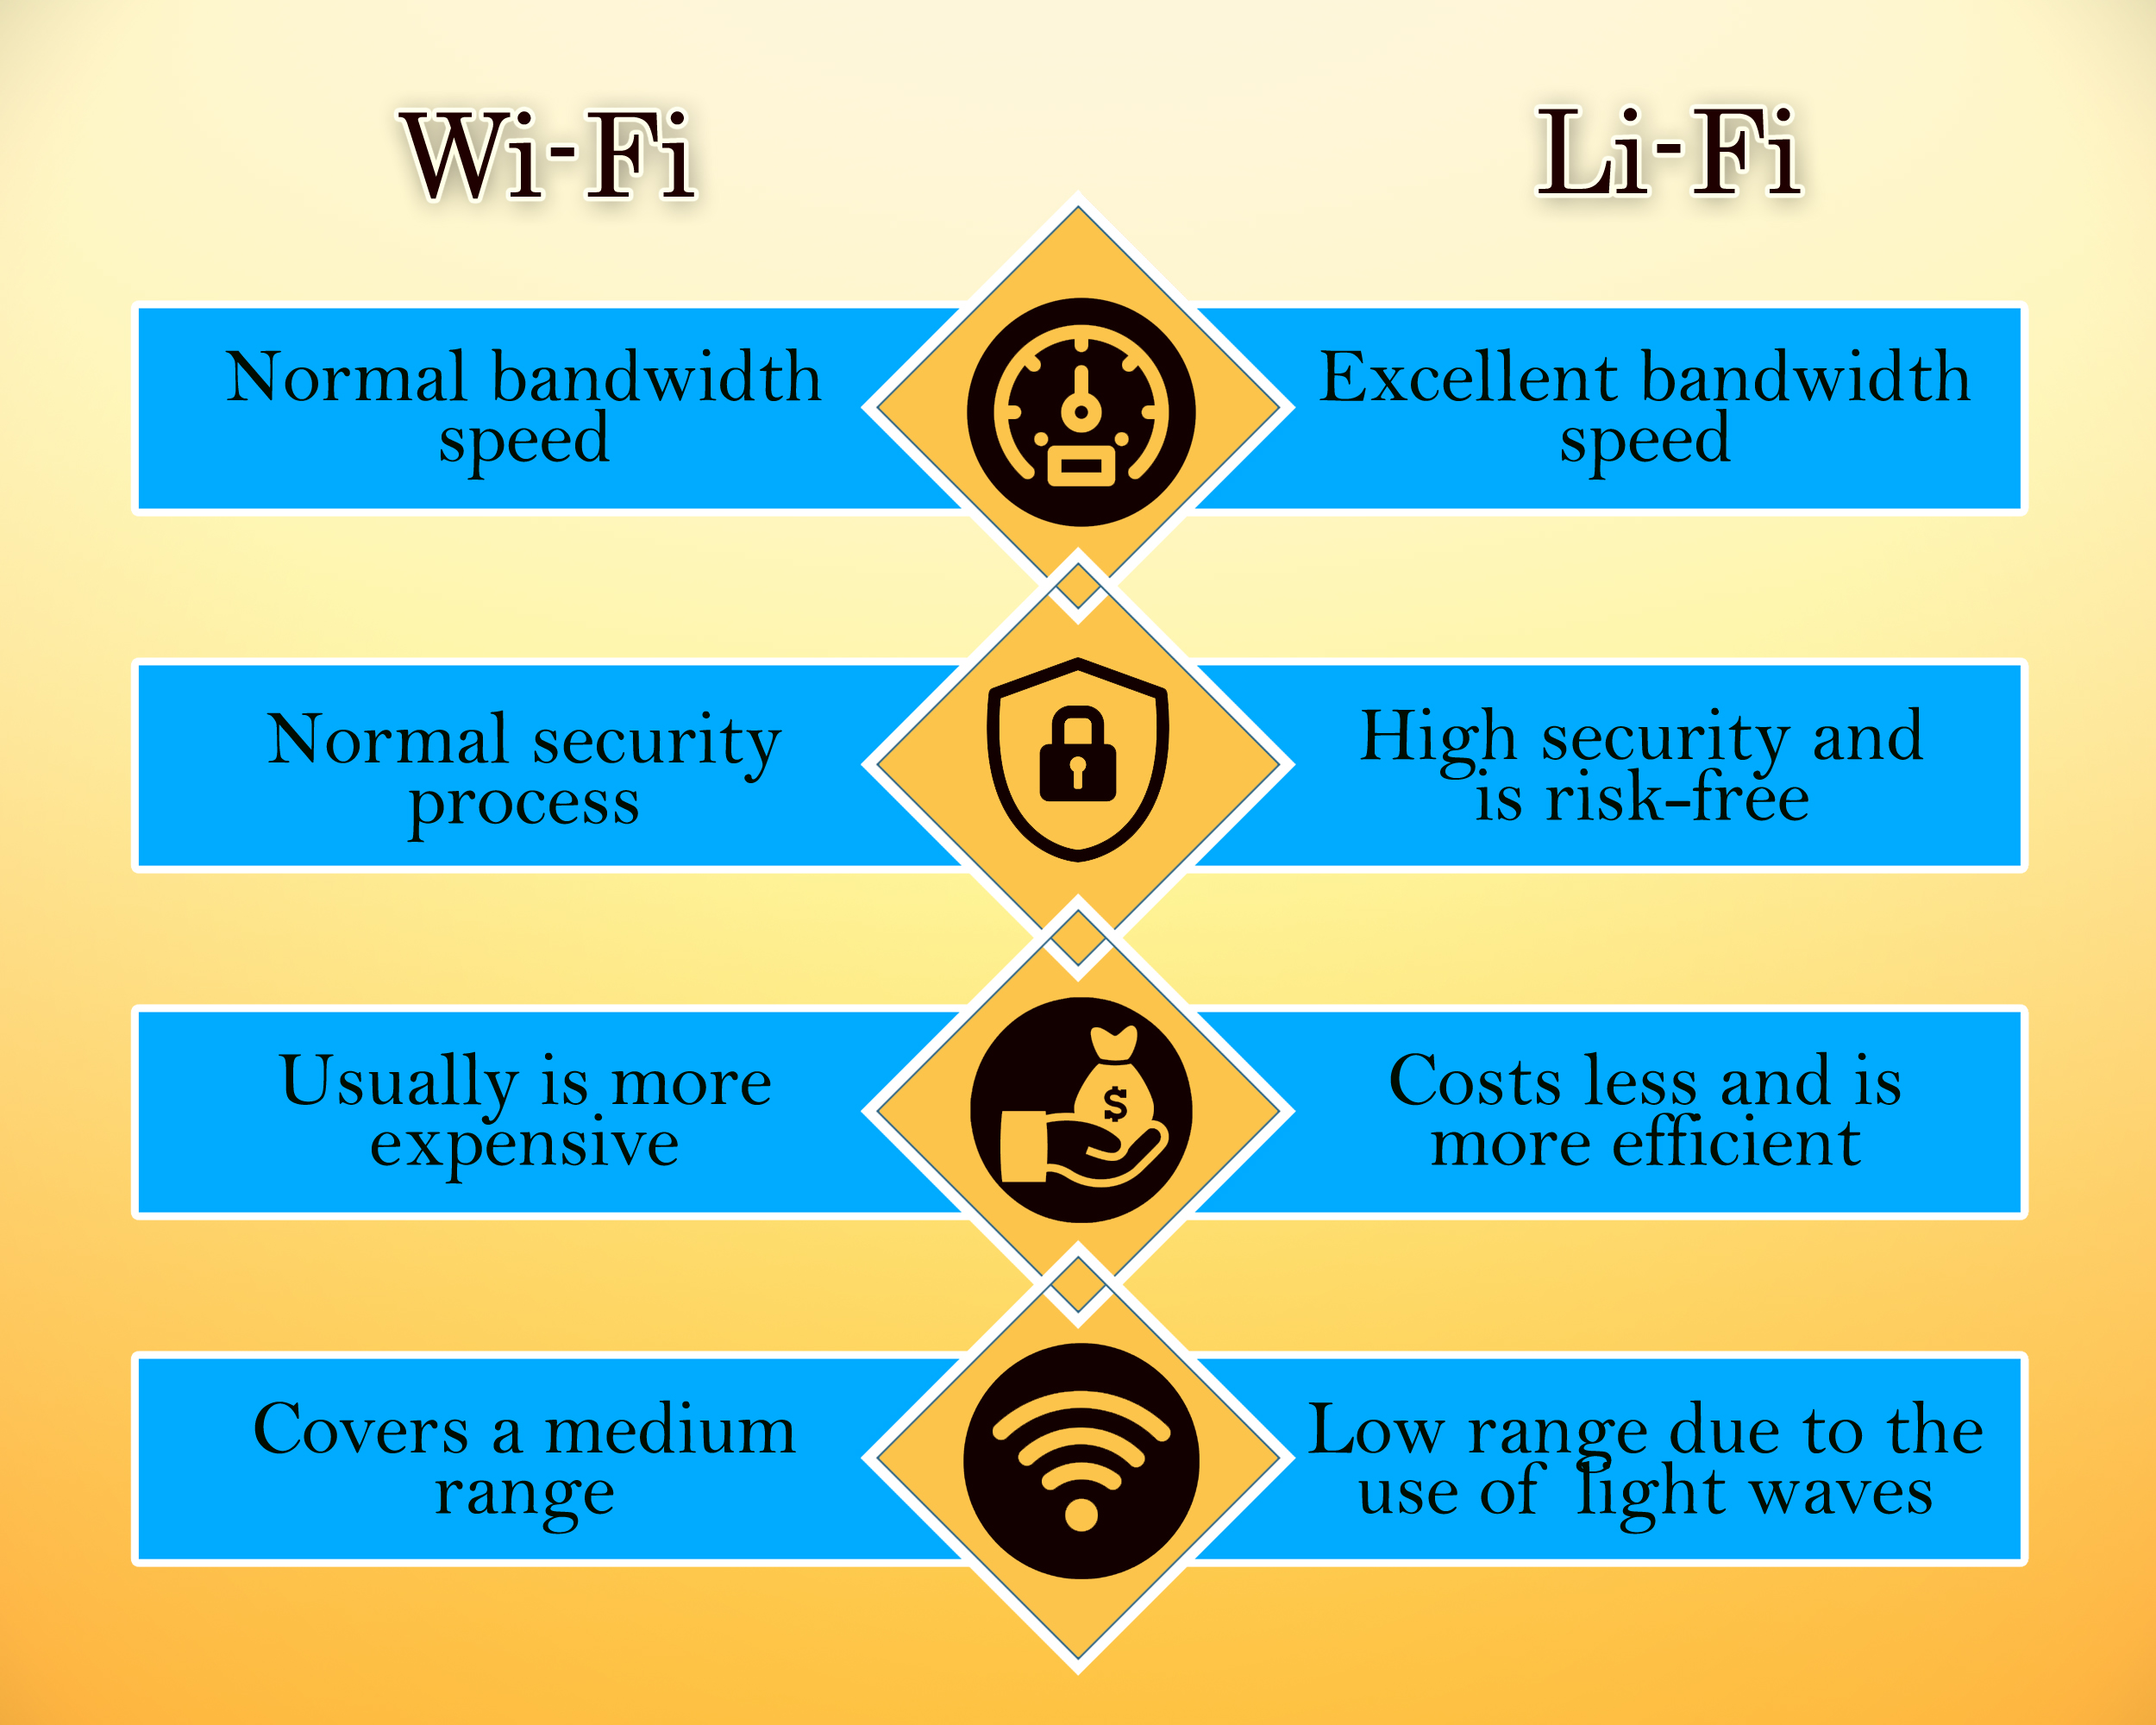 Difference Between Li-Fi and Wi-Fi